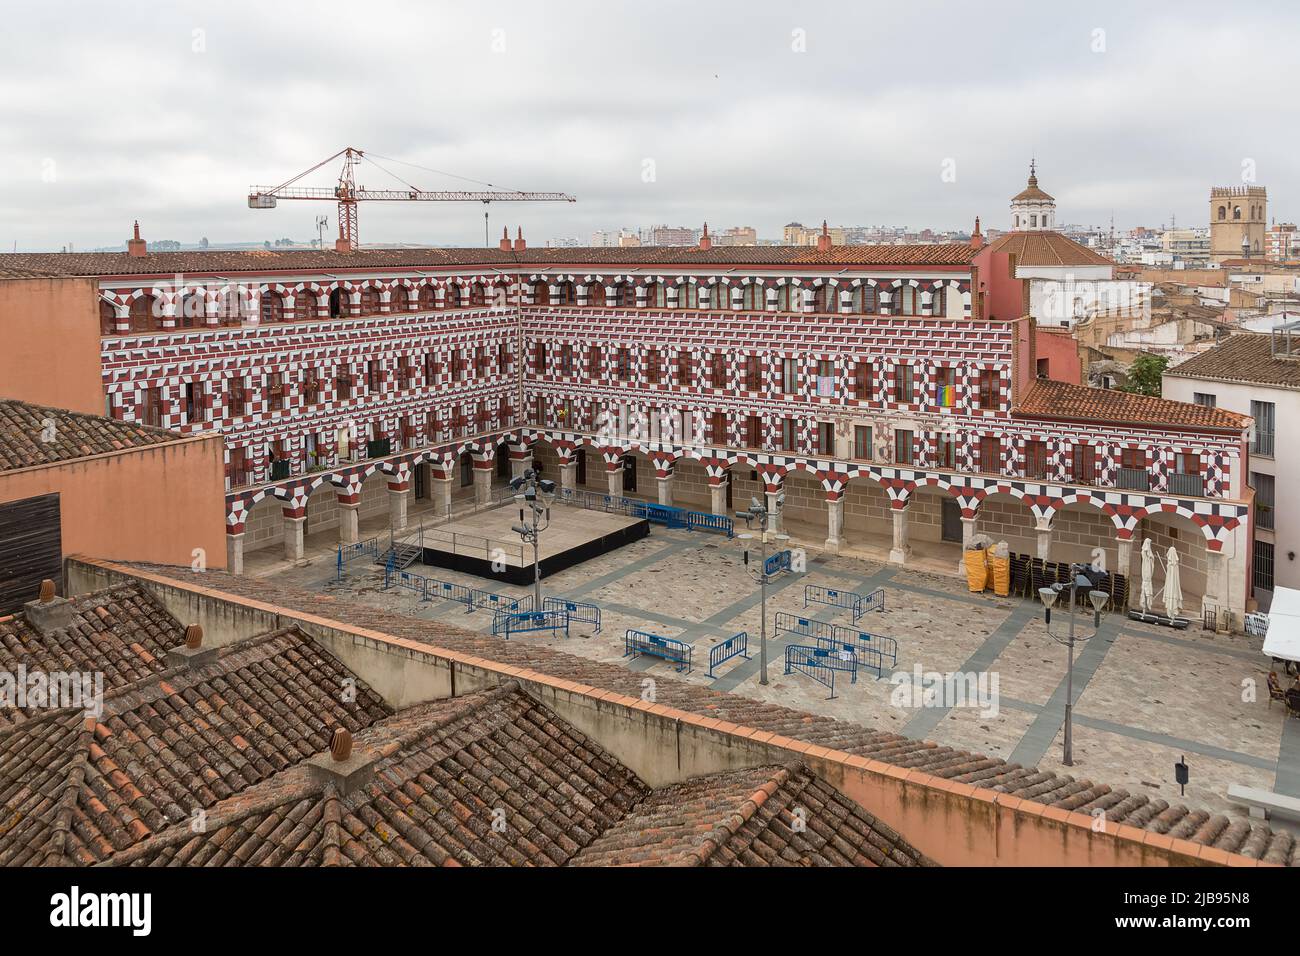 Badajoz Spagna - 09 17 2021: Vista aerea presso le case colorate, casas coloradas, sulla Piazza alta Badajoz, Plaza alta de Badajoz, con edifici tipici, Foto Stock